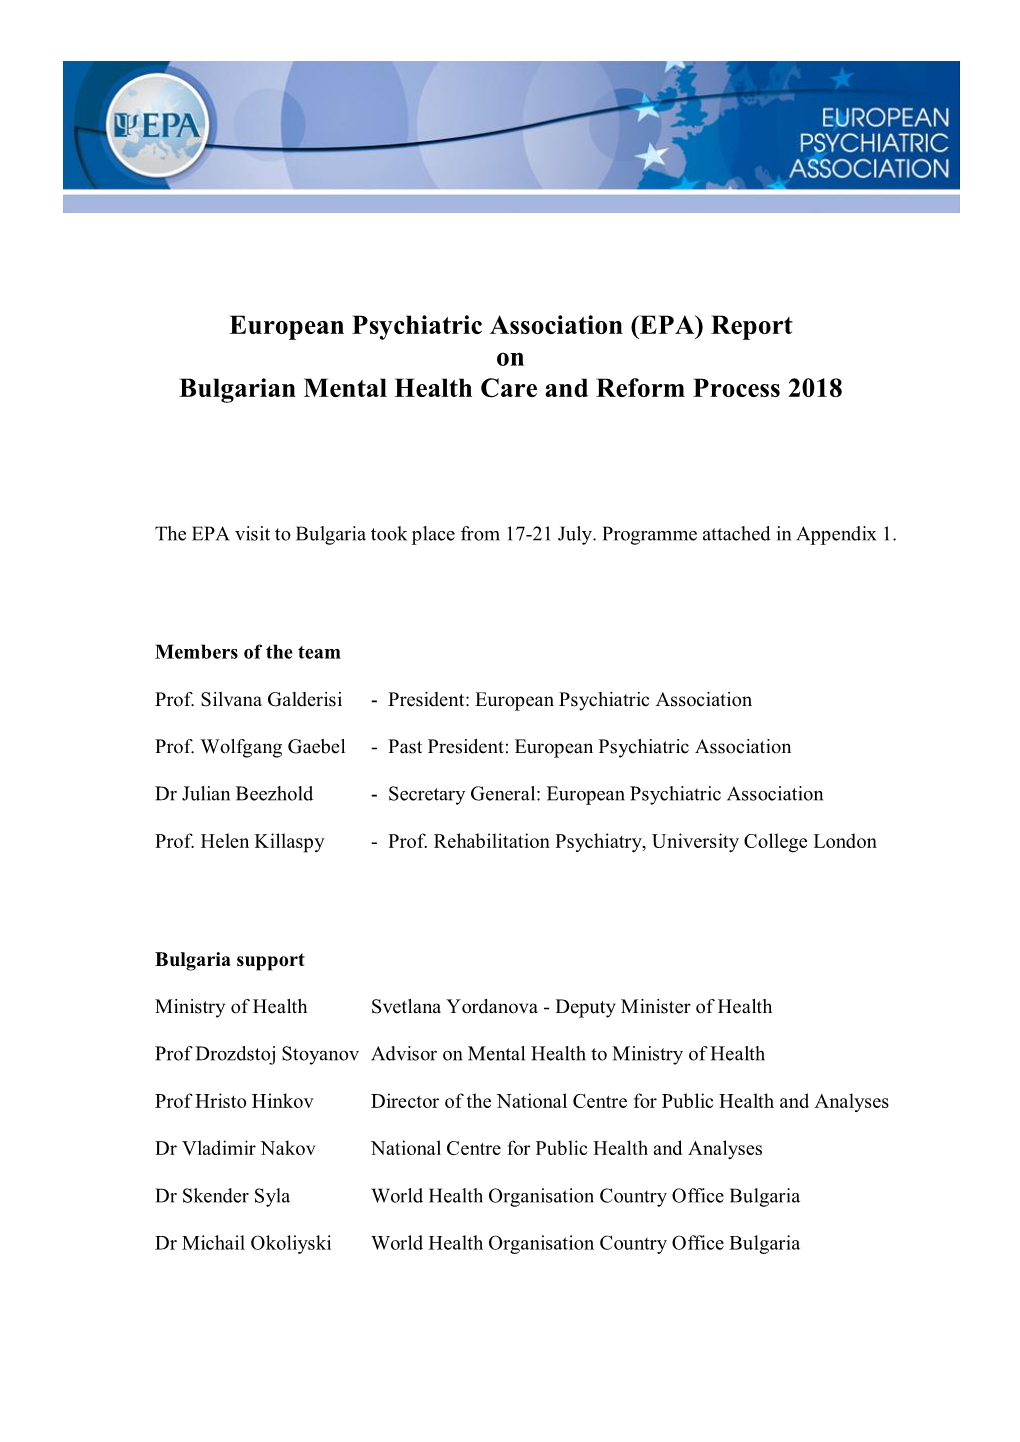 European Psychiatric Association (EPA) Report on Bulgarian Mental Health Care and Reform Process 2018